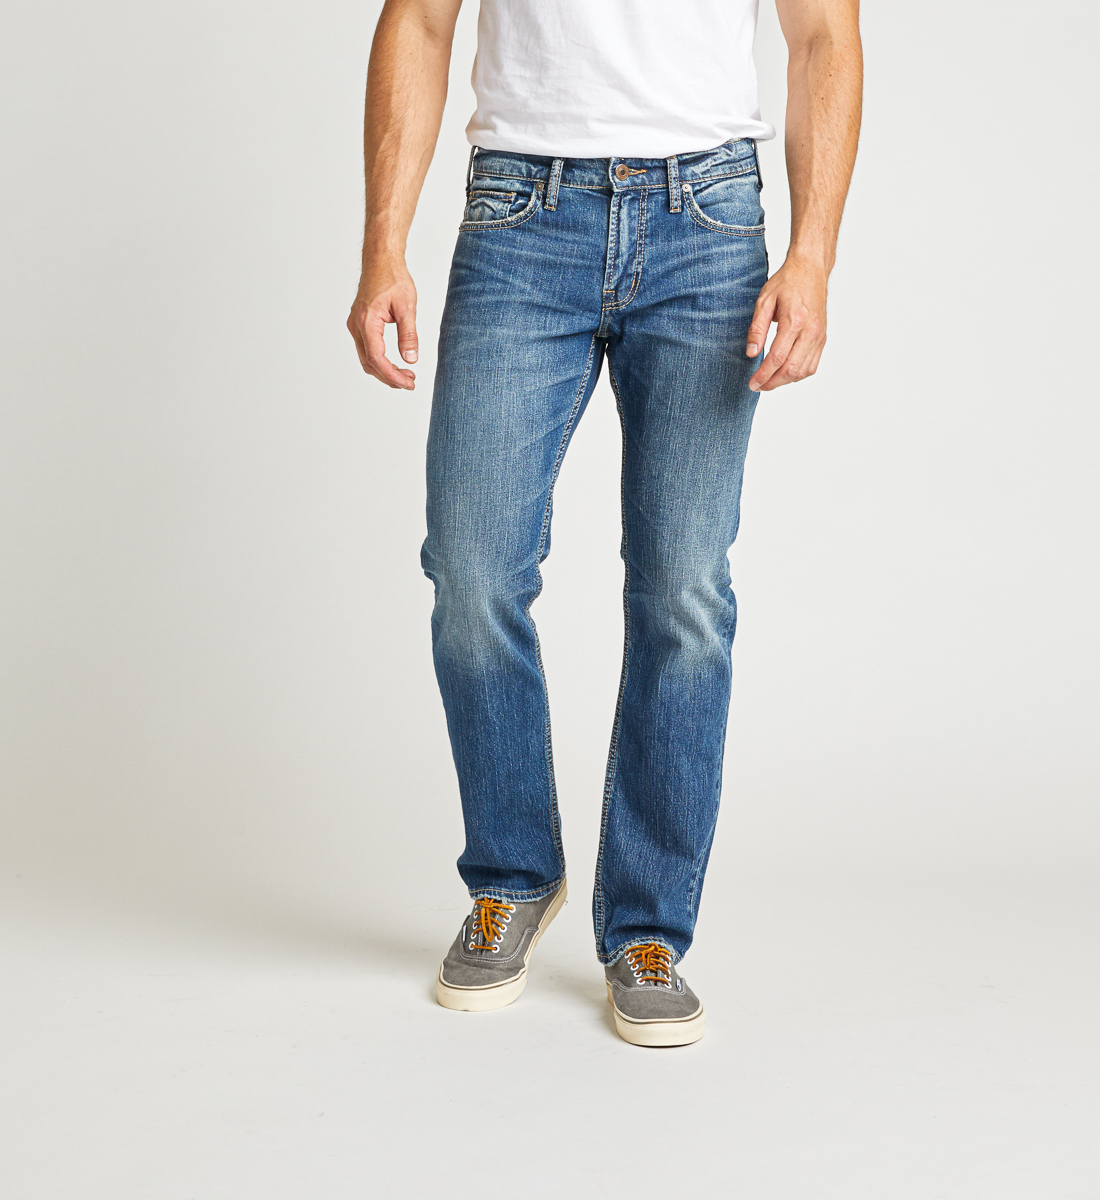 classic fit straight leg jeans